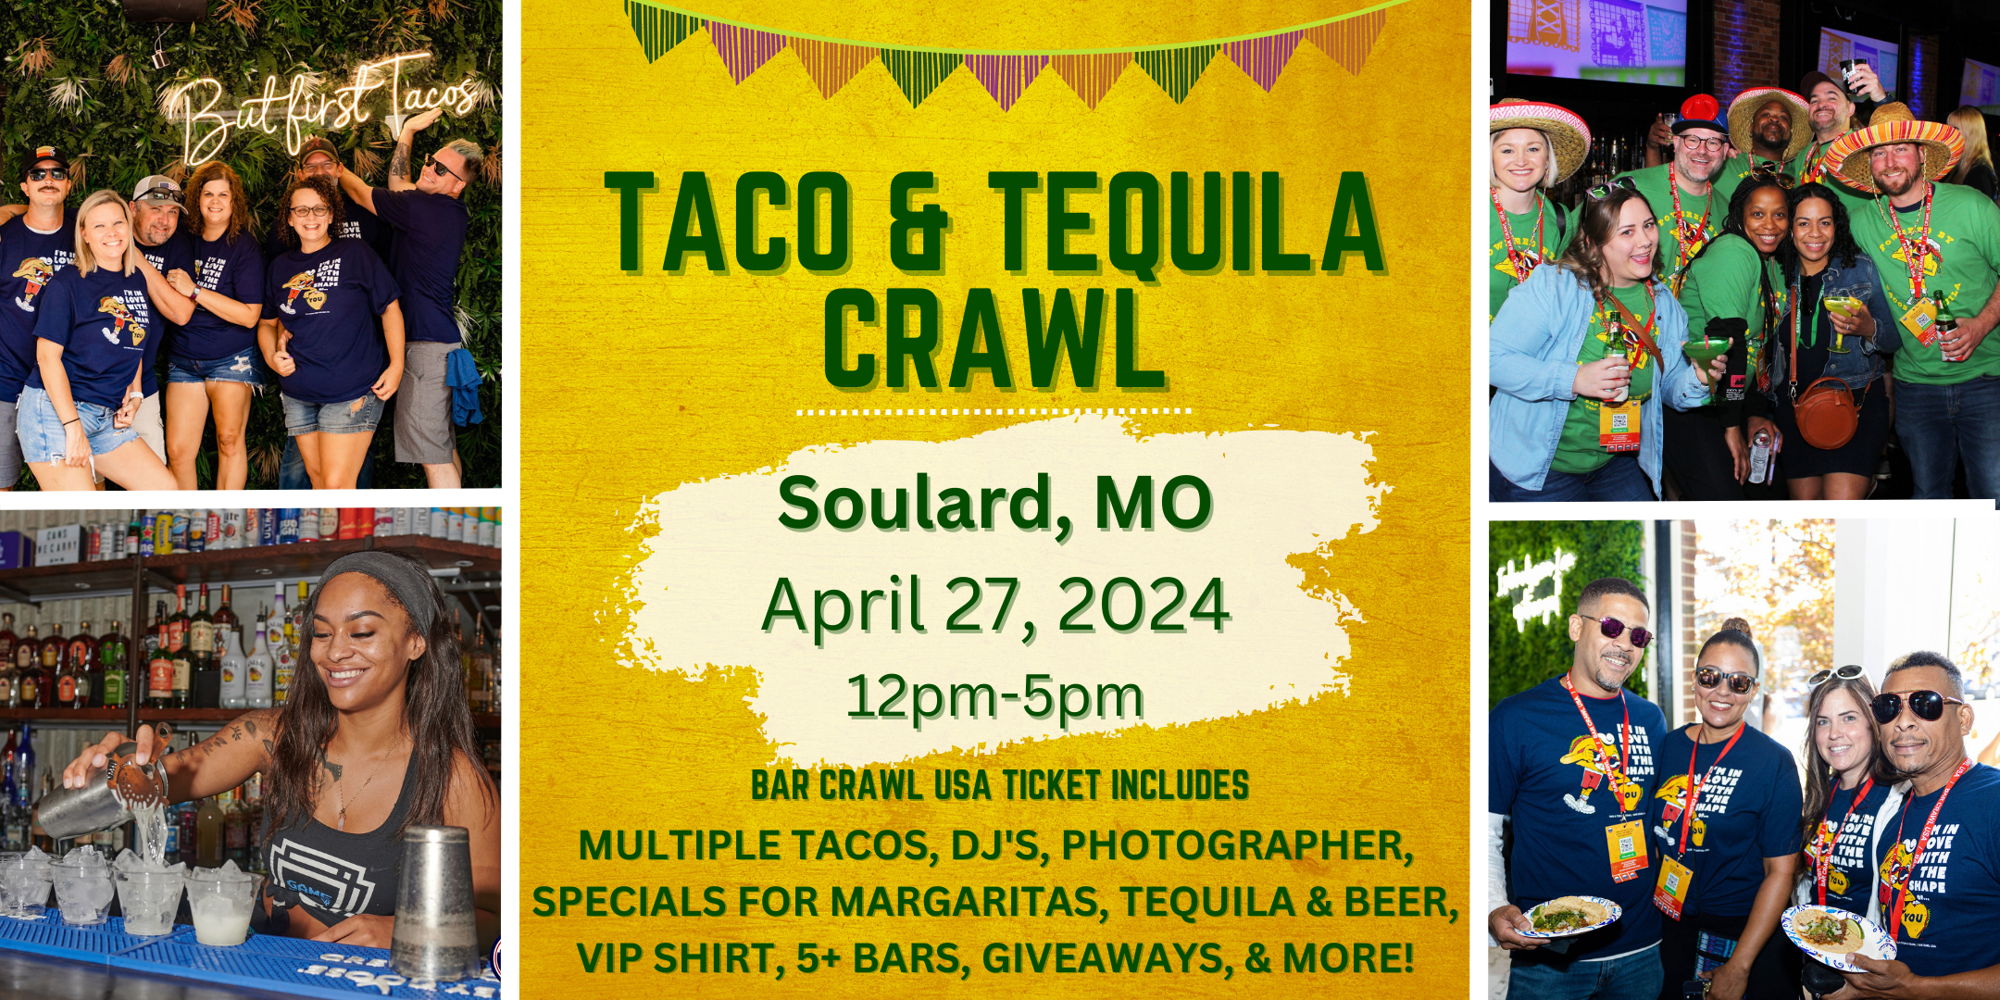 Soulard Taco & Tequila Bar Crawl: 5th Annual promotional image